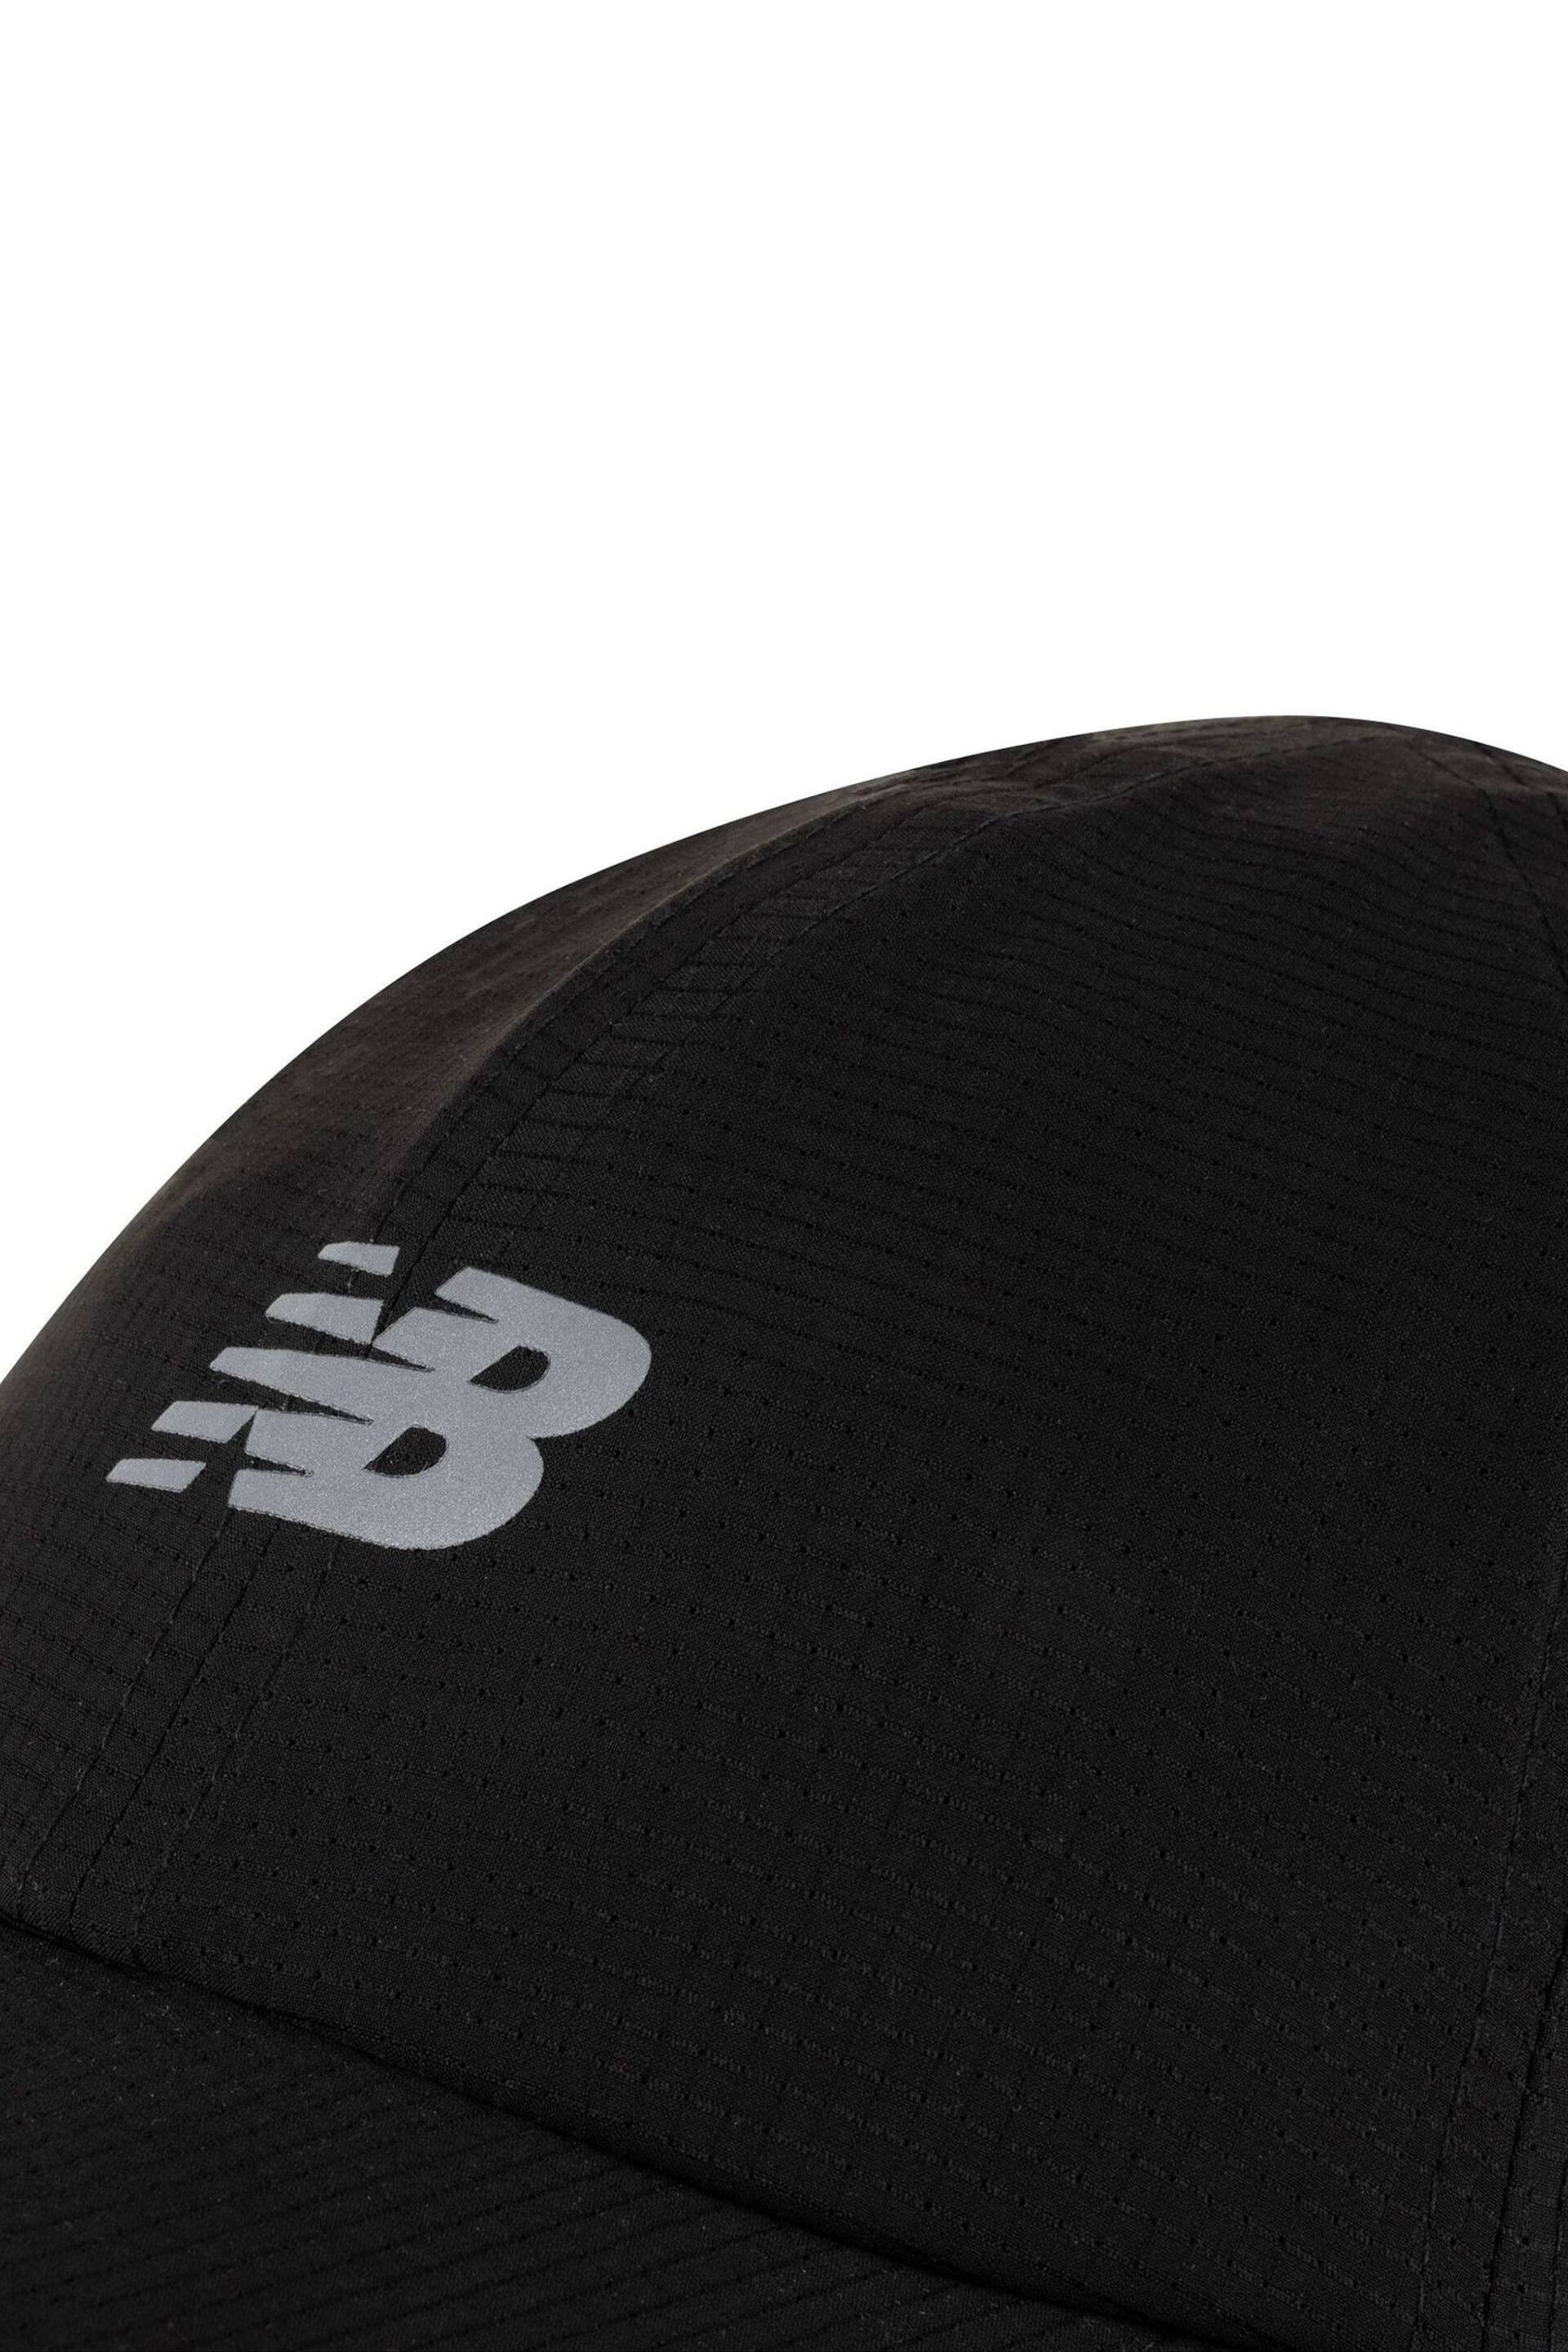 New Balance Black 6 Panel Performance Hat - Image 3 of 3